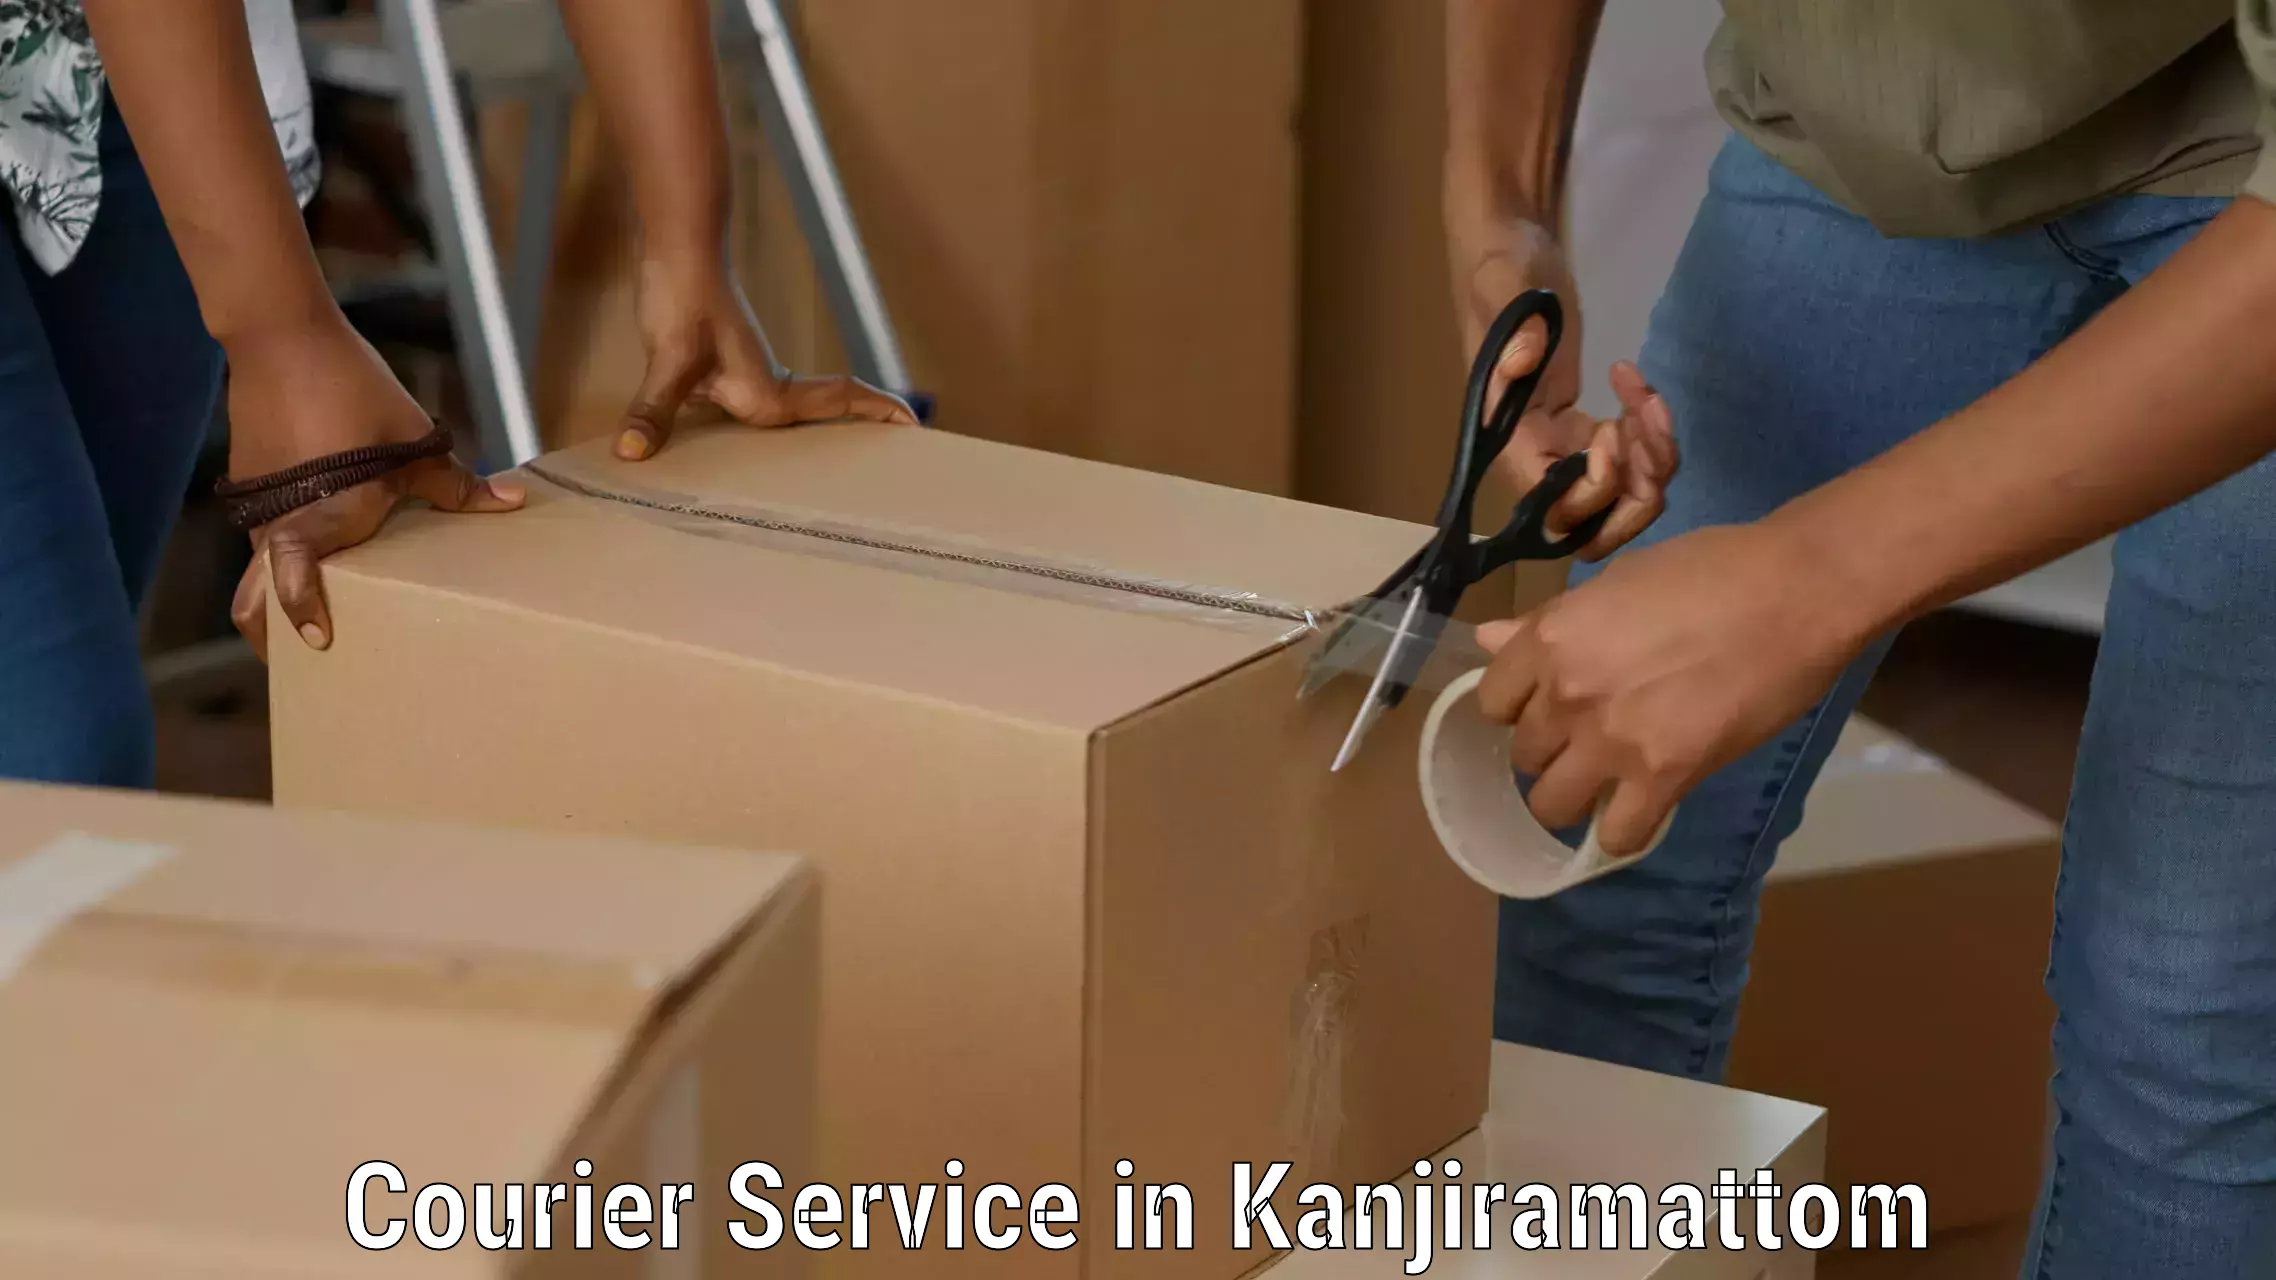 Express delivery capabilities in Kanjiramattom